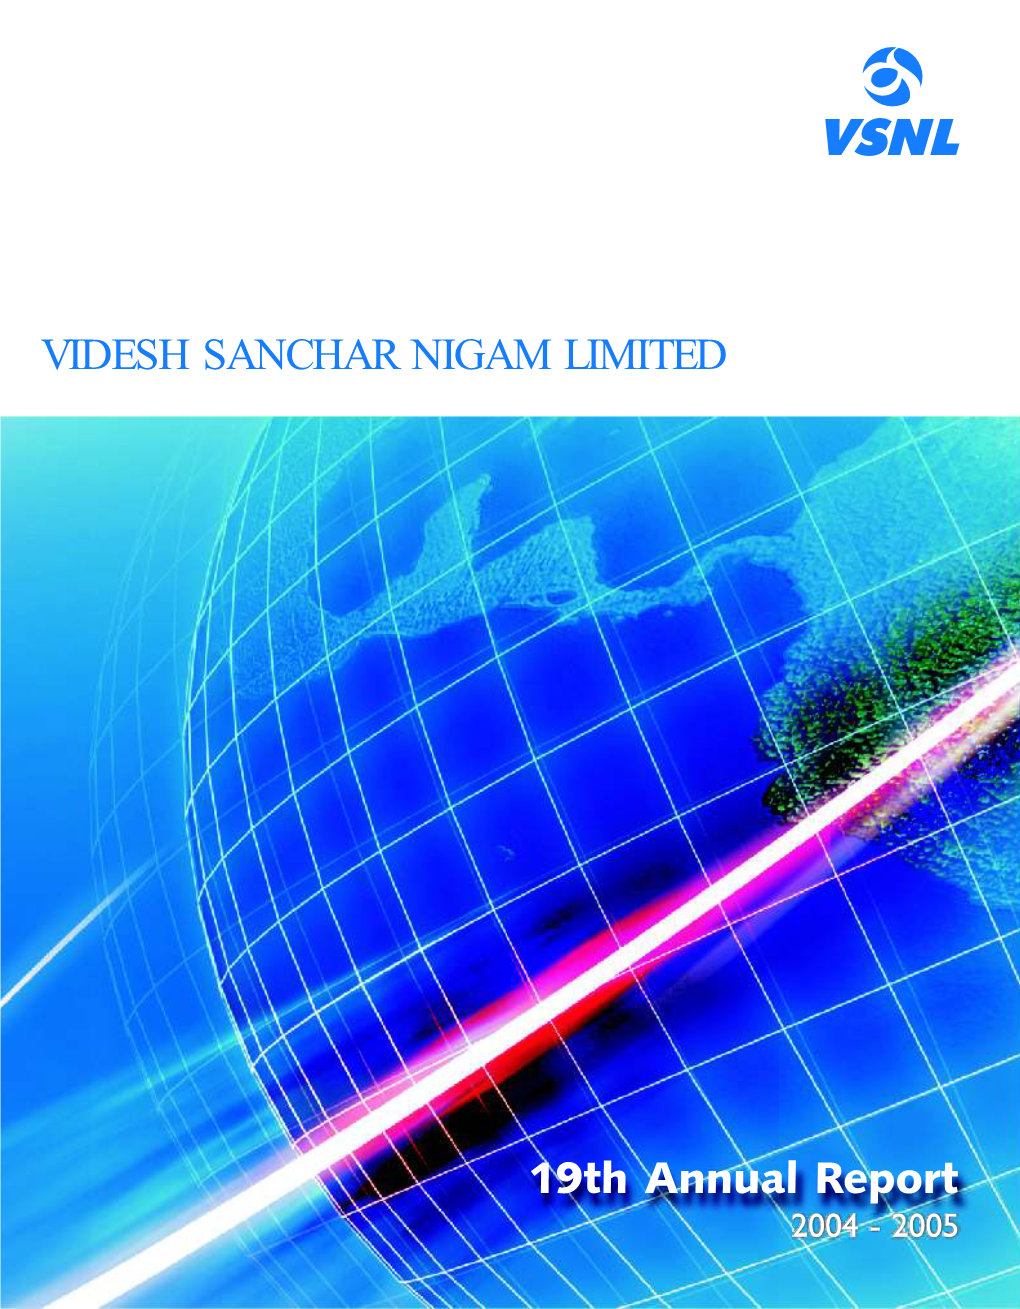 VIDESH SANCHAR NIGAM LIMITED Registered Office: Videsh Sanchar Bhavan Mahatma Gandhi Road Mumbai 400 001 India Visit Us At